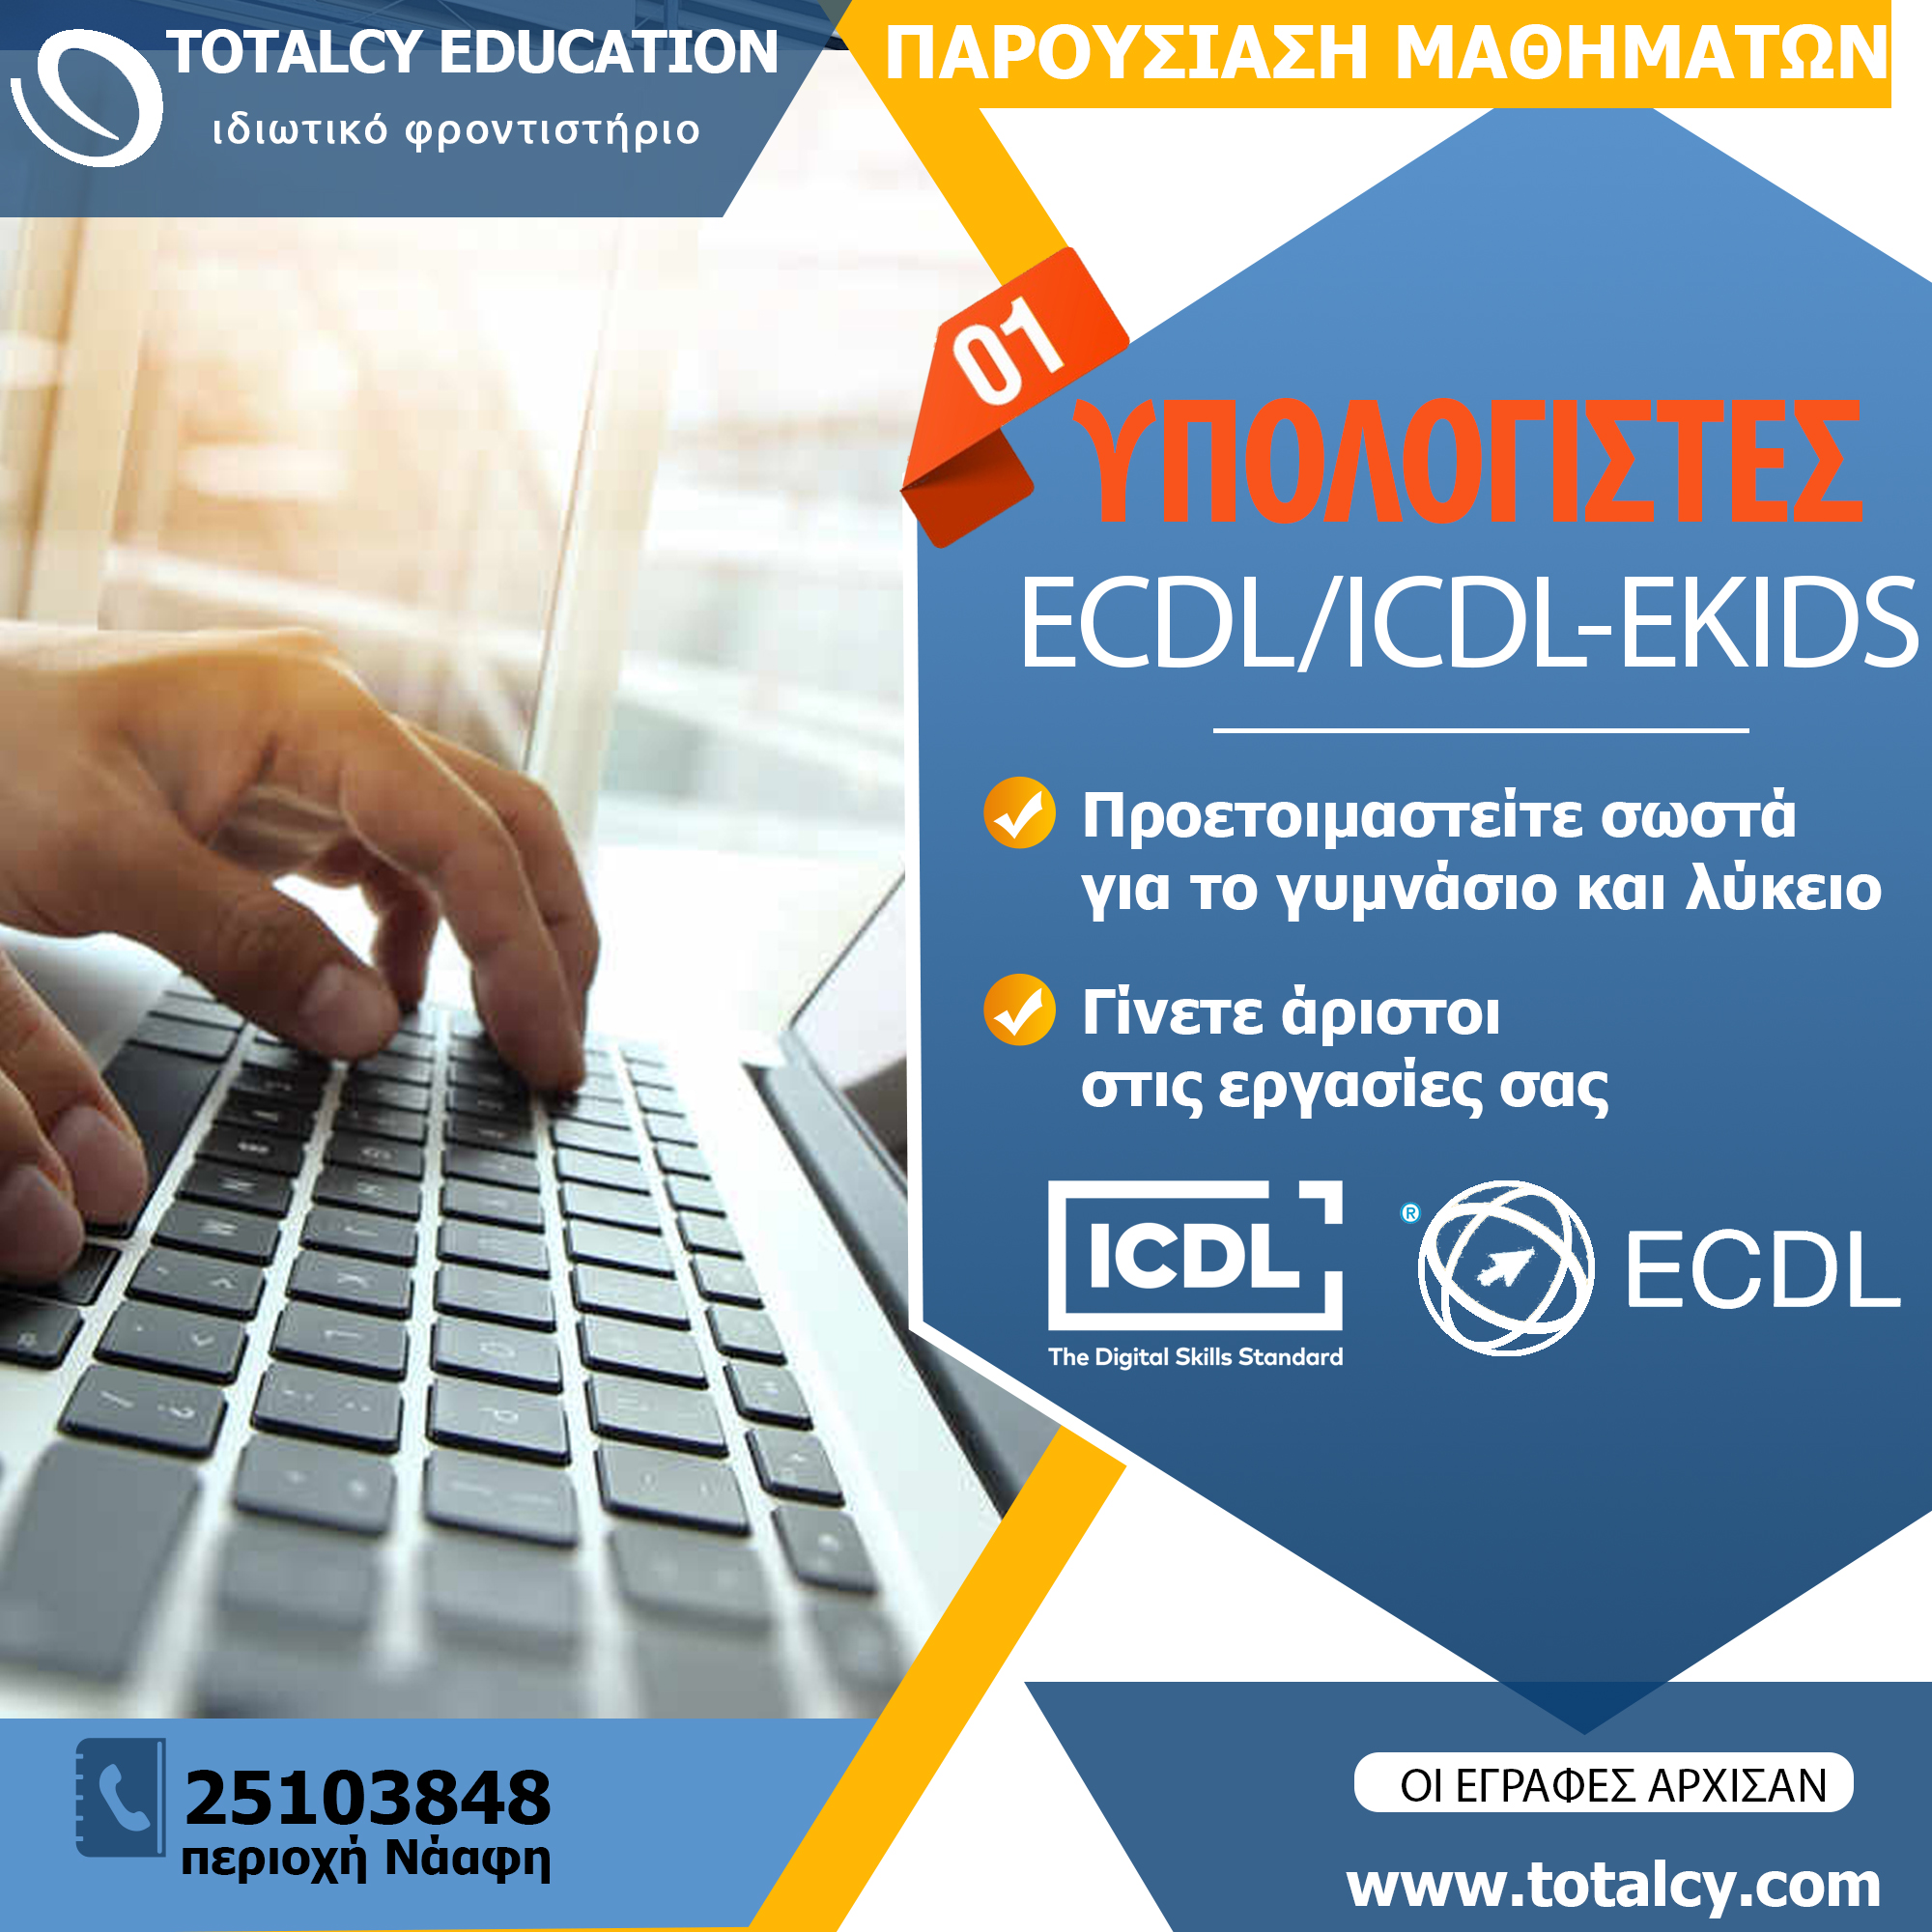 ECDL ICDL Limassol